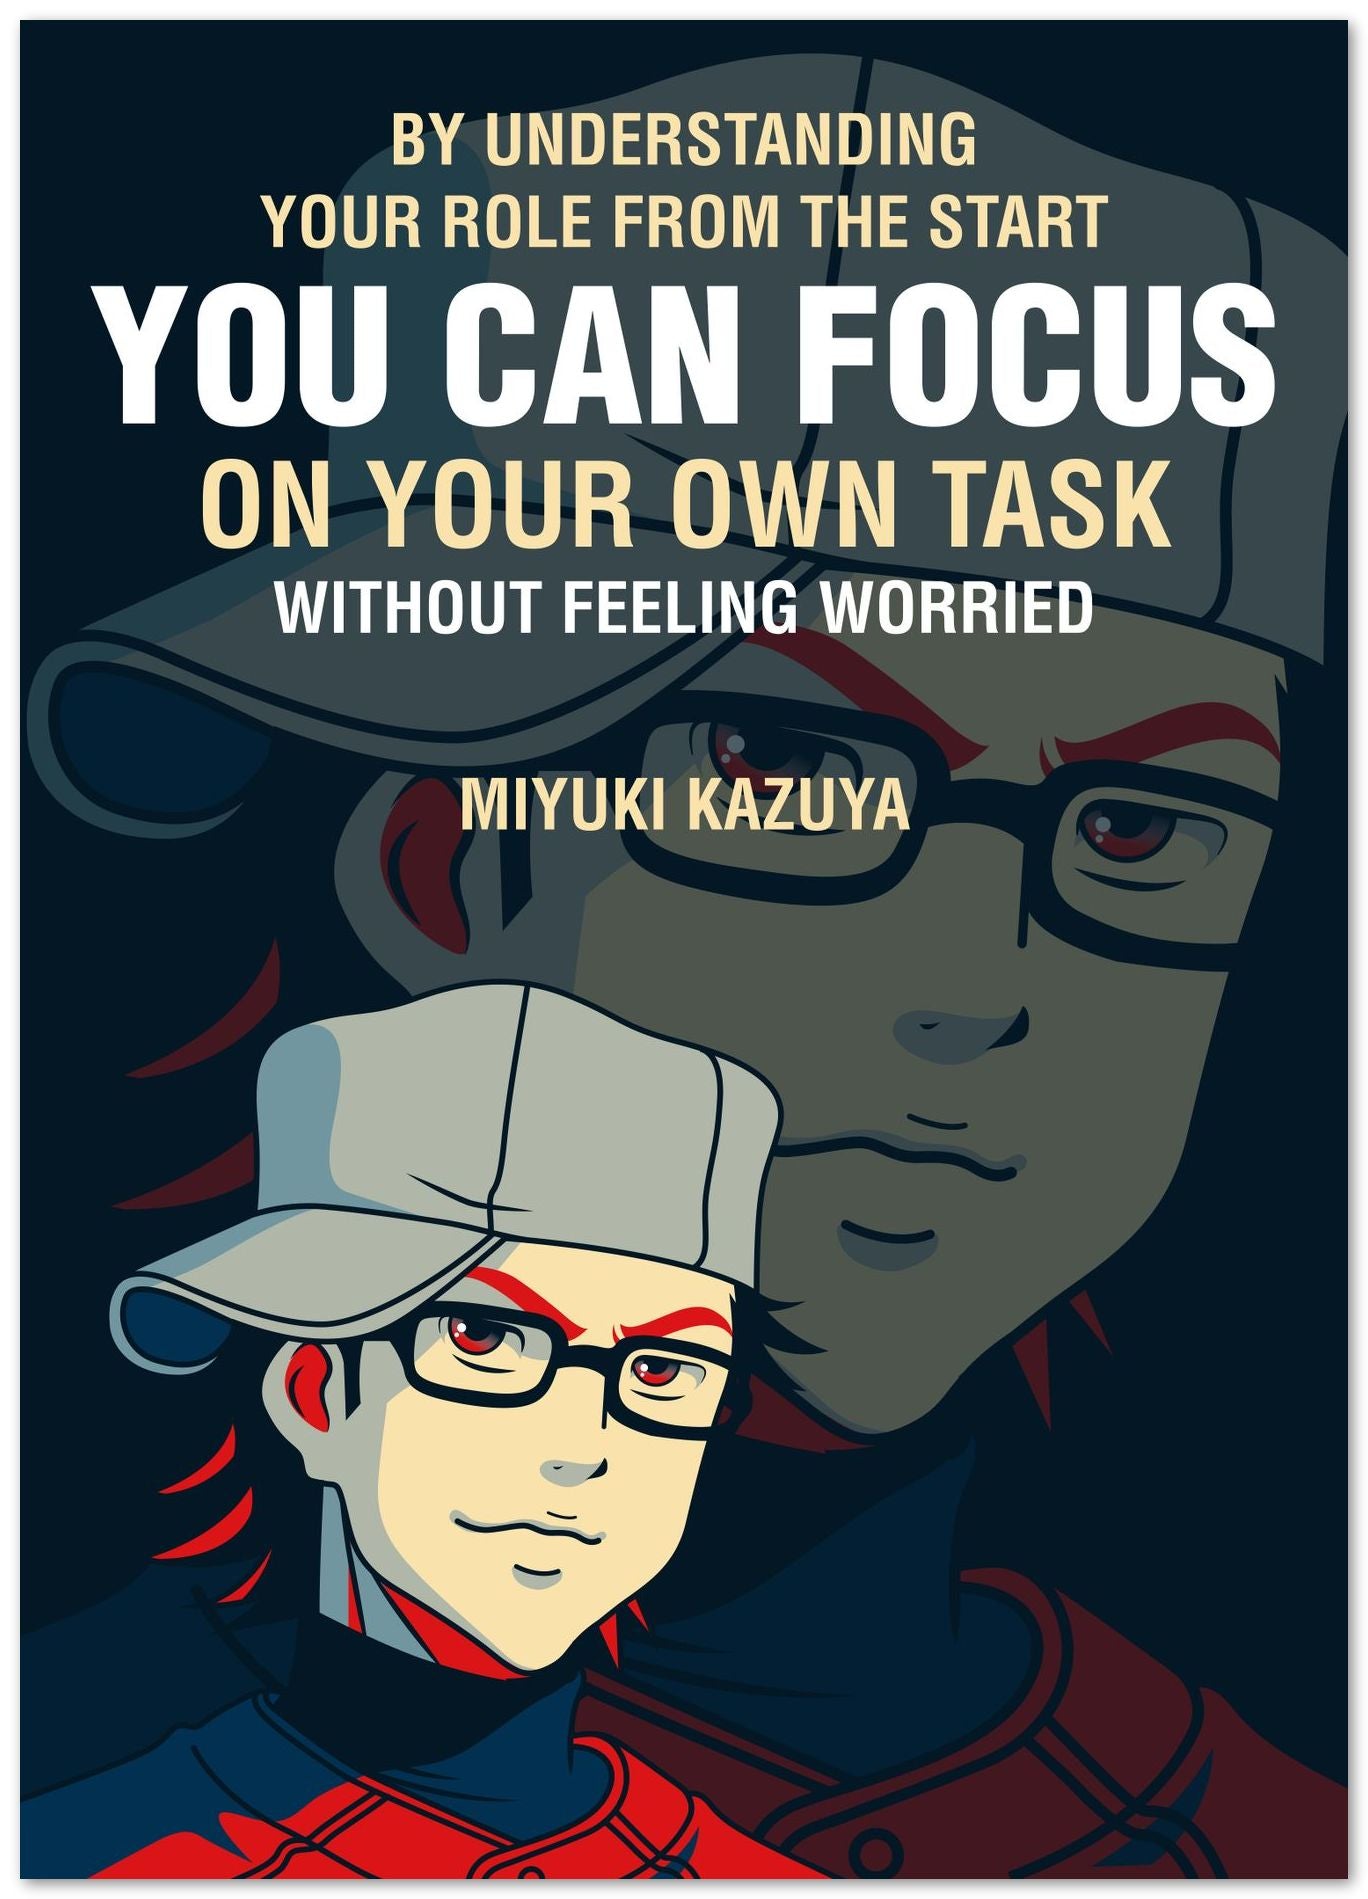 Anime Quotes by Miyuki Kazuya: Focus on Your Own Task - @HidayahCreative